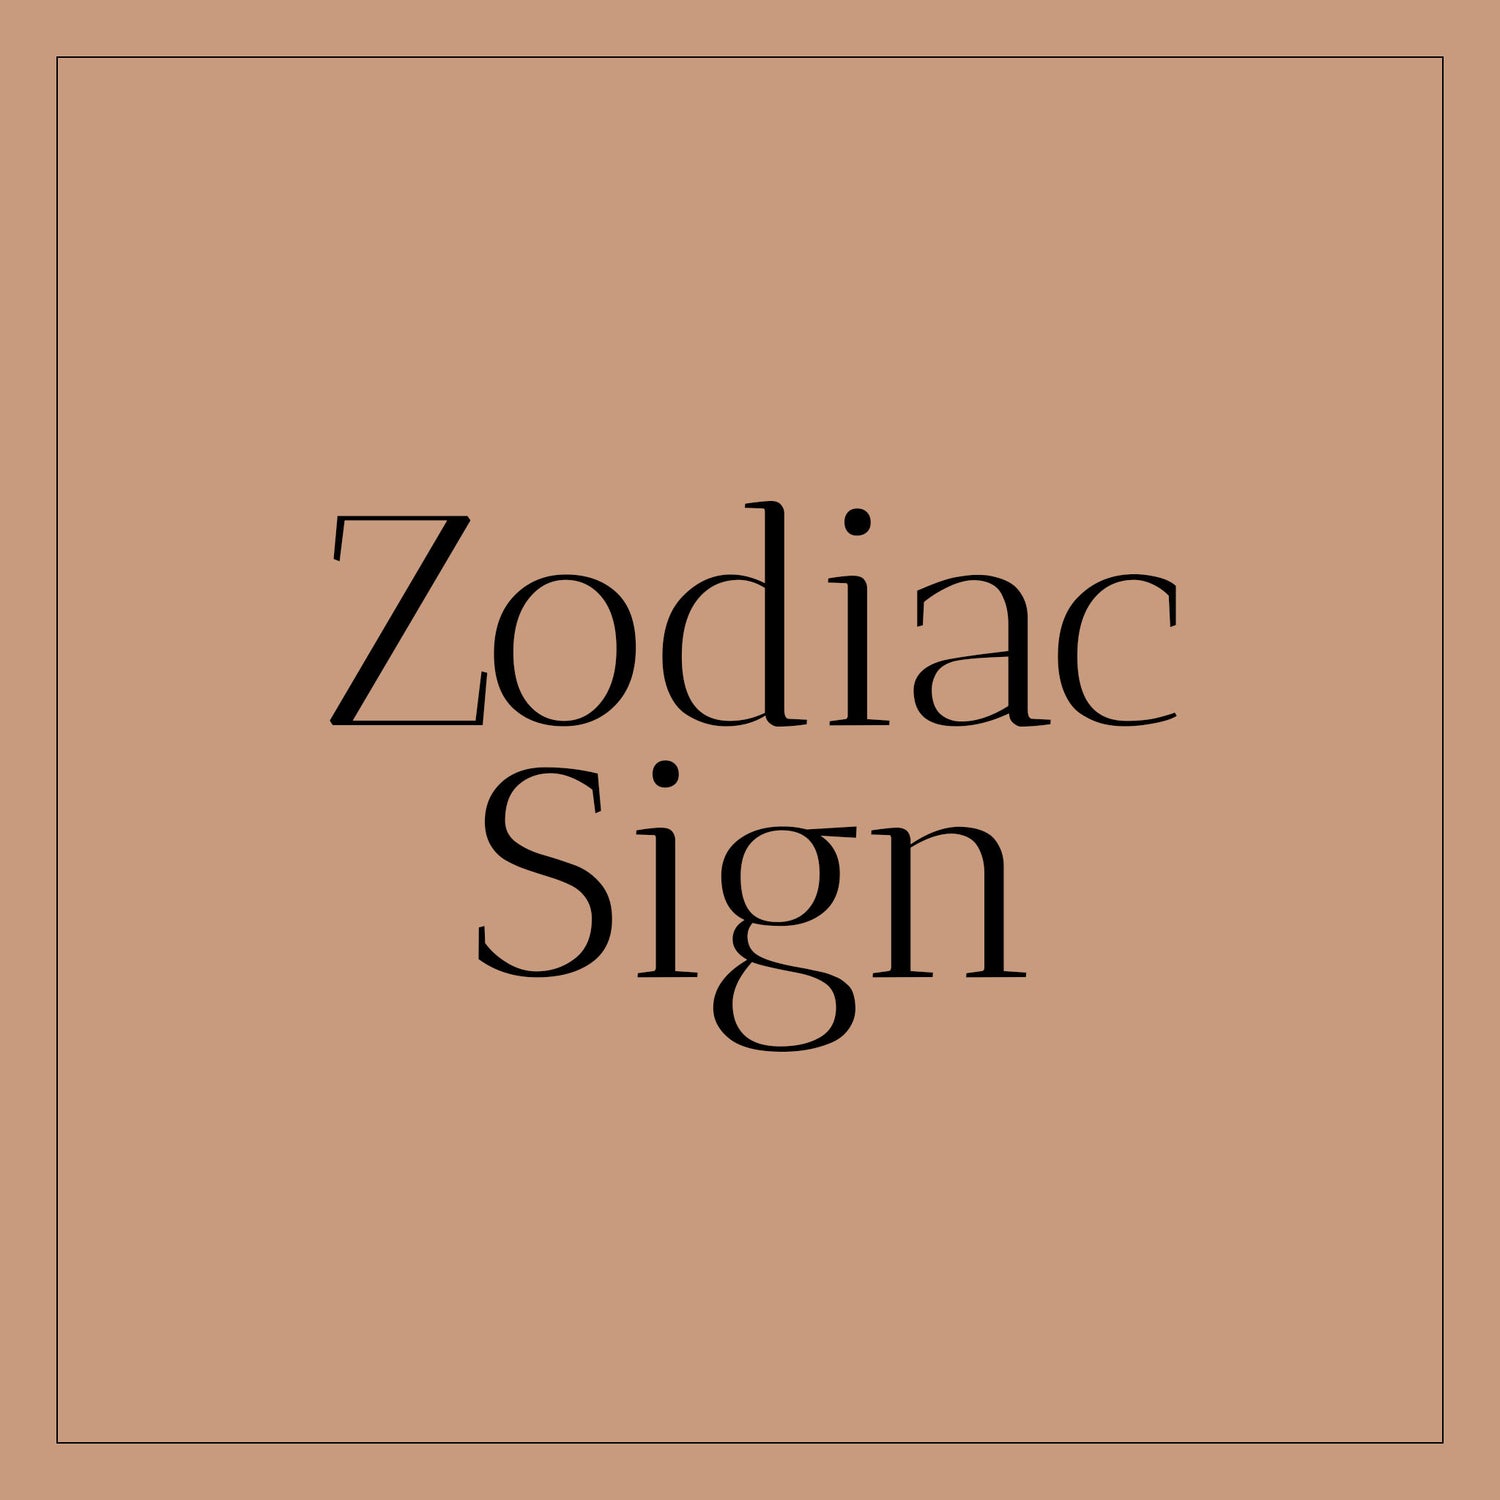 stardate-zodiac-selector-image